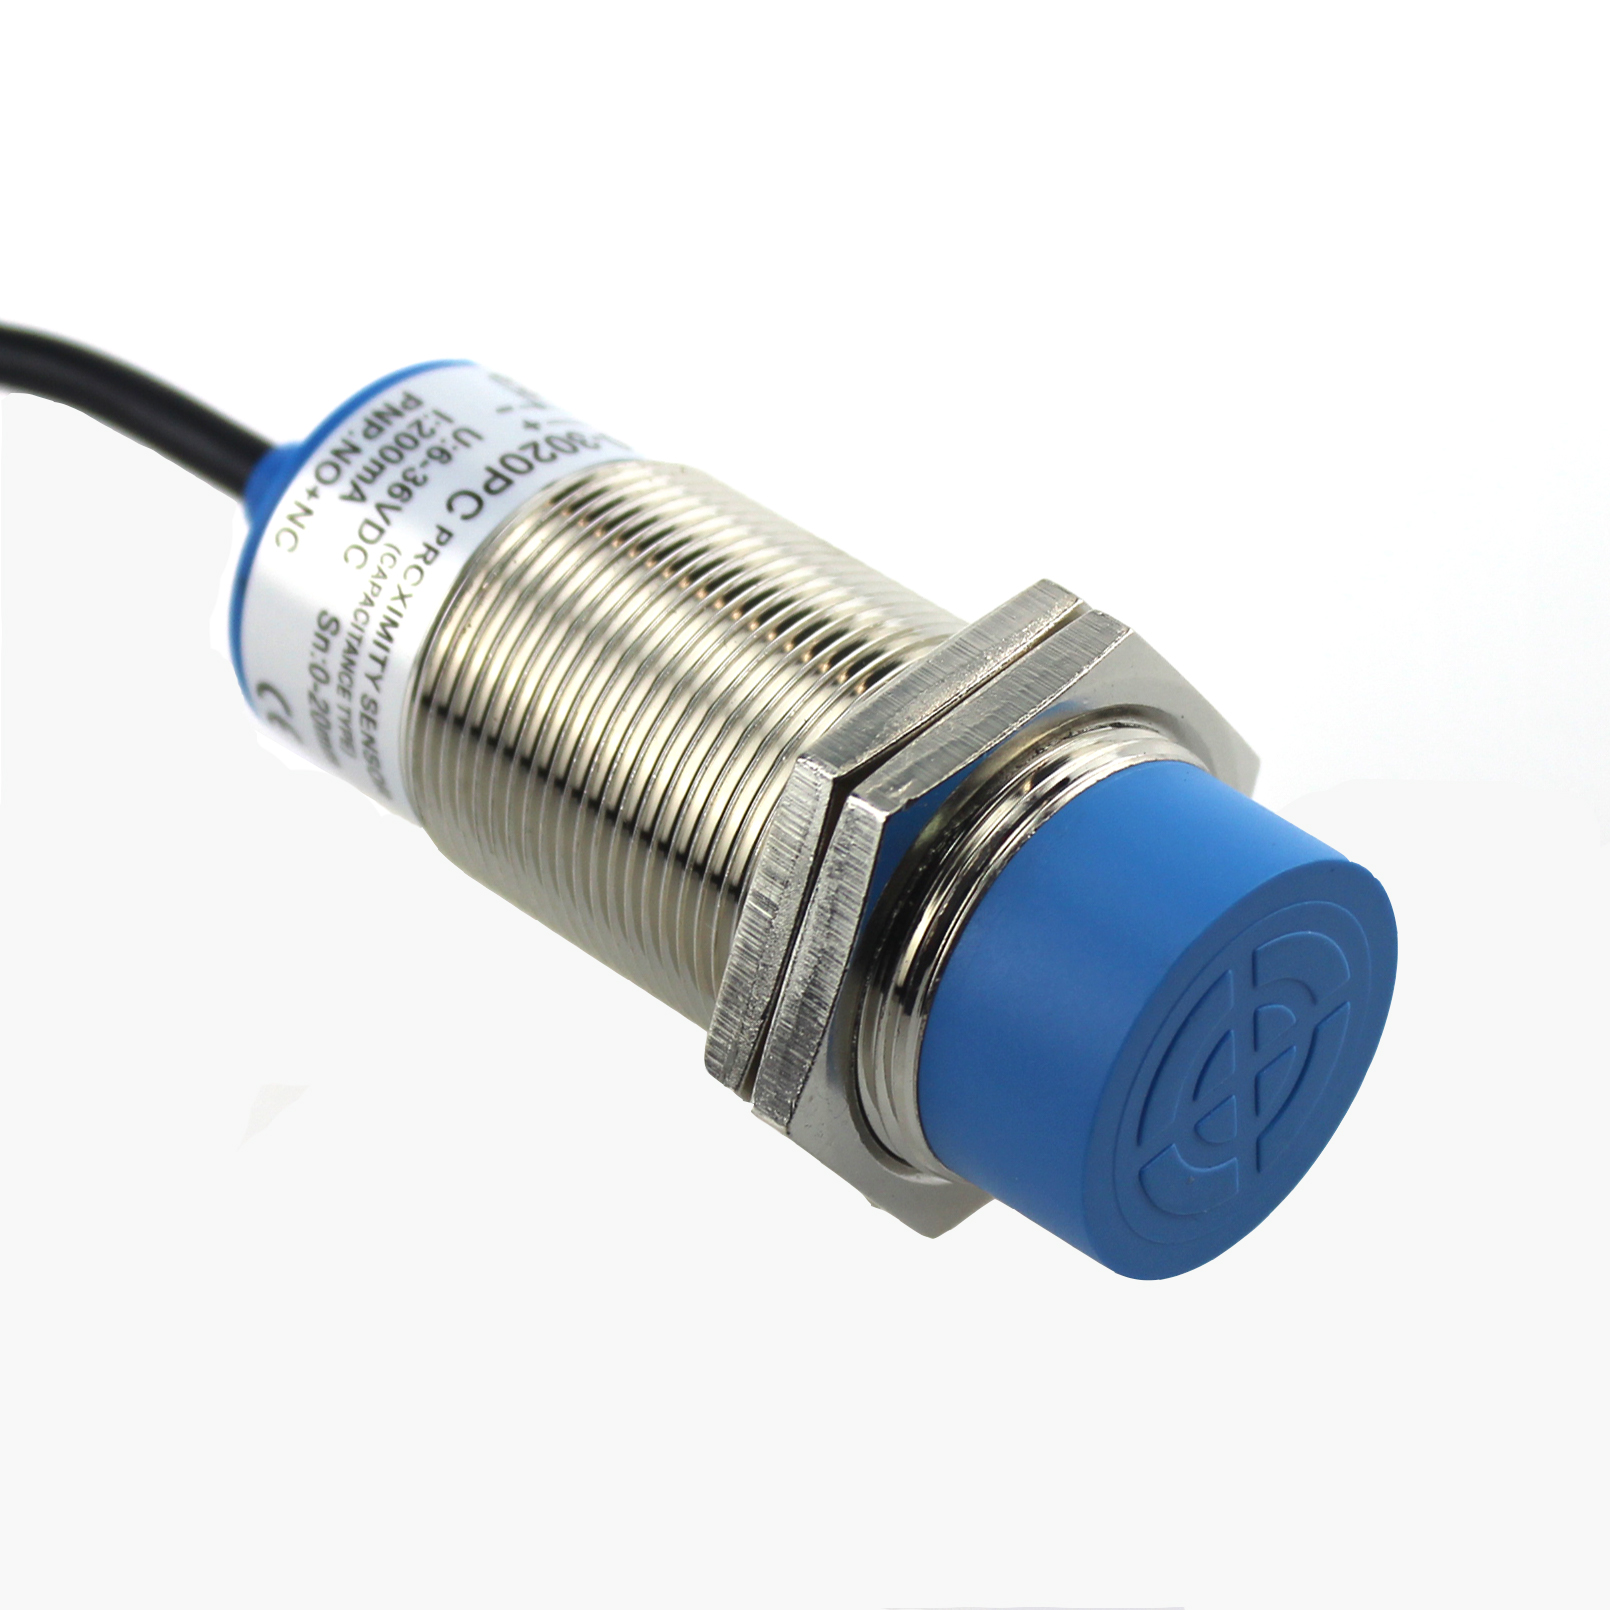 CM30-3020PC capacitance proximity switch sensor